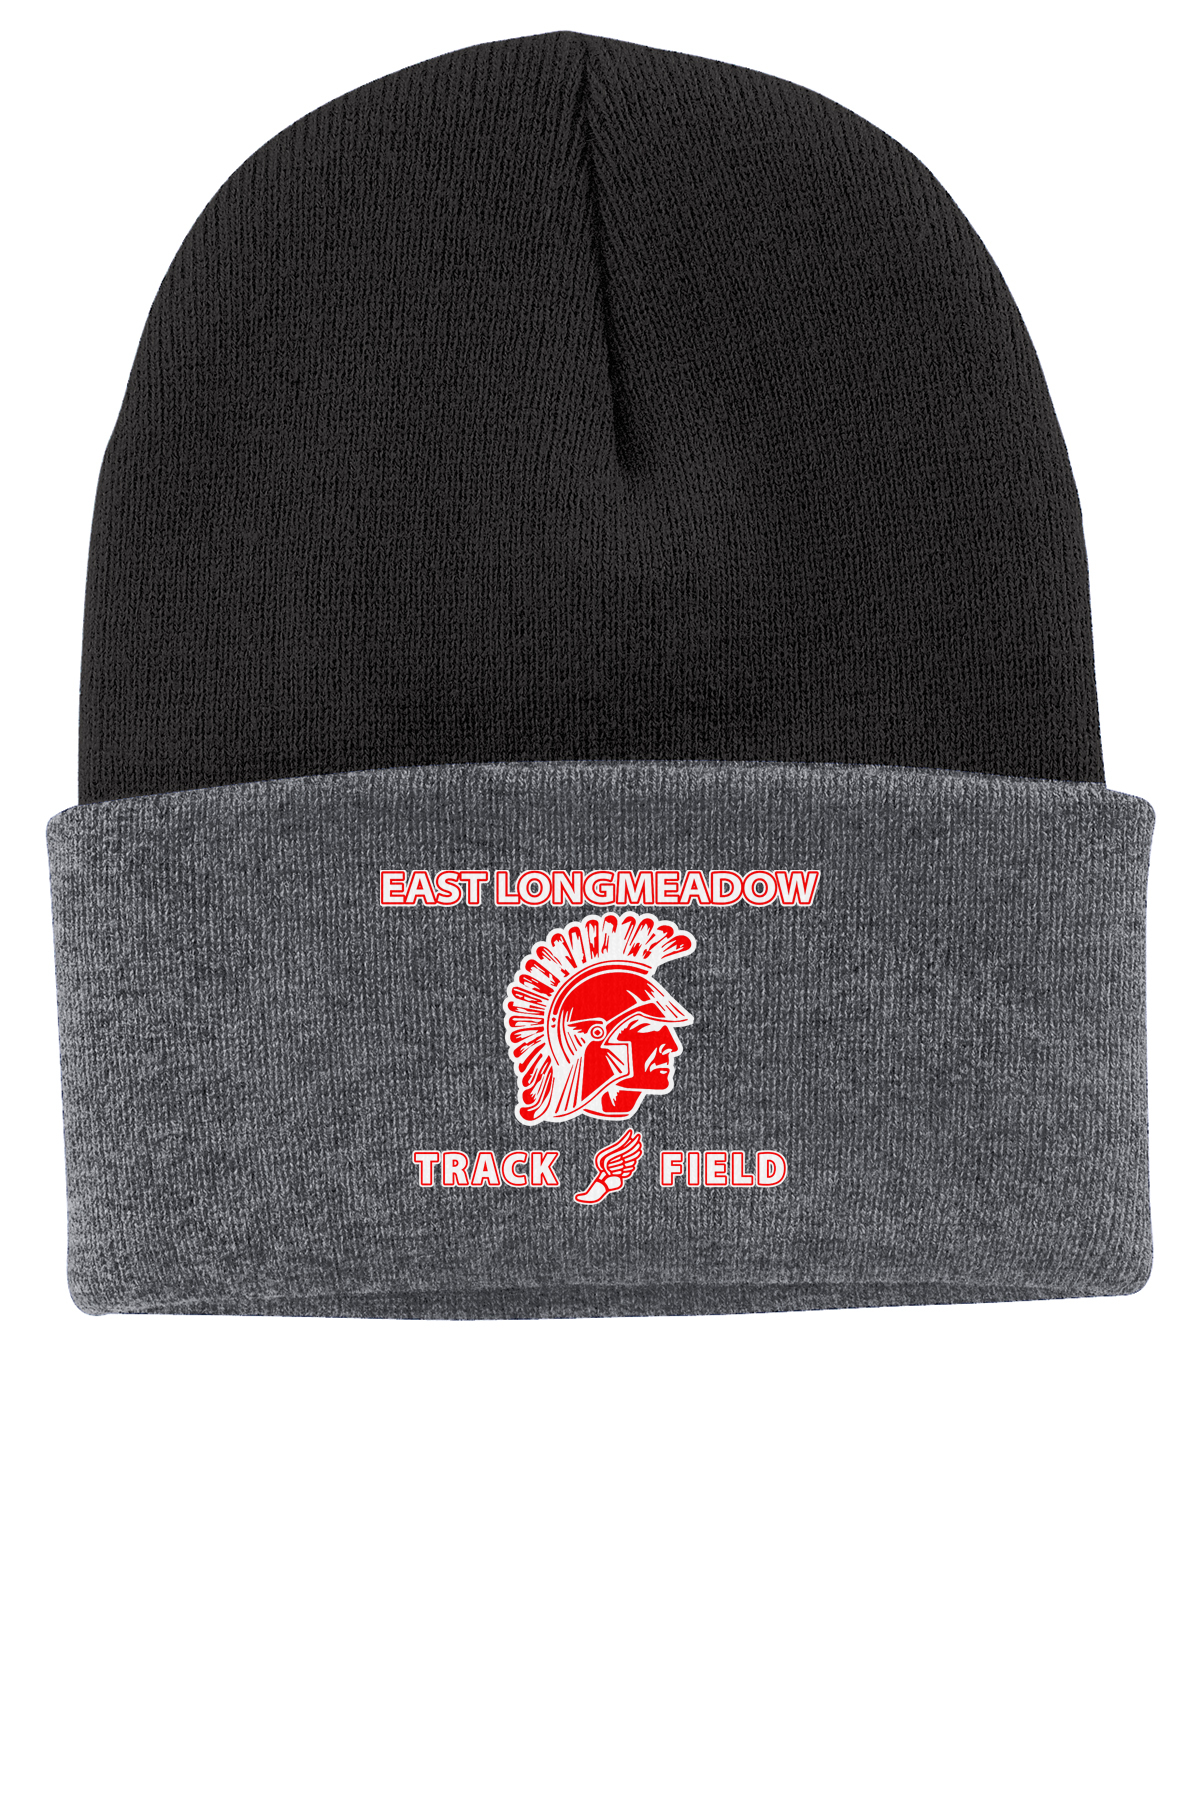 East Longmeadow Track and Field Black/Oxford Knit Beanie